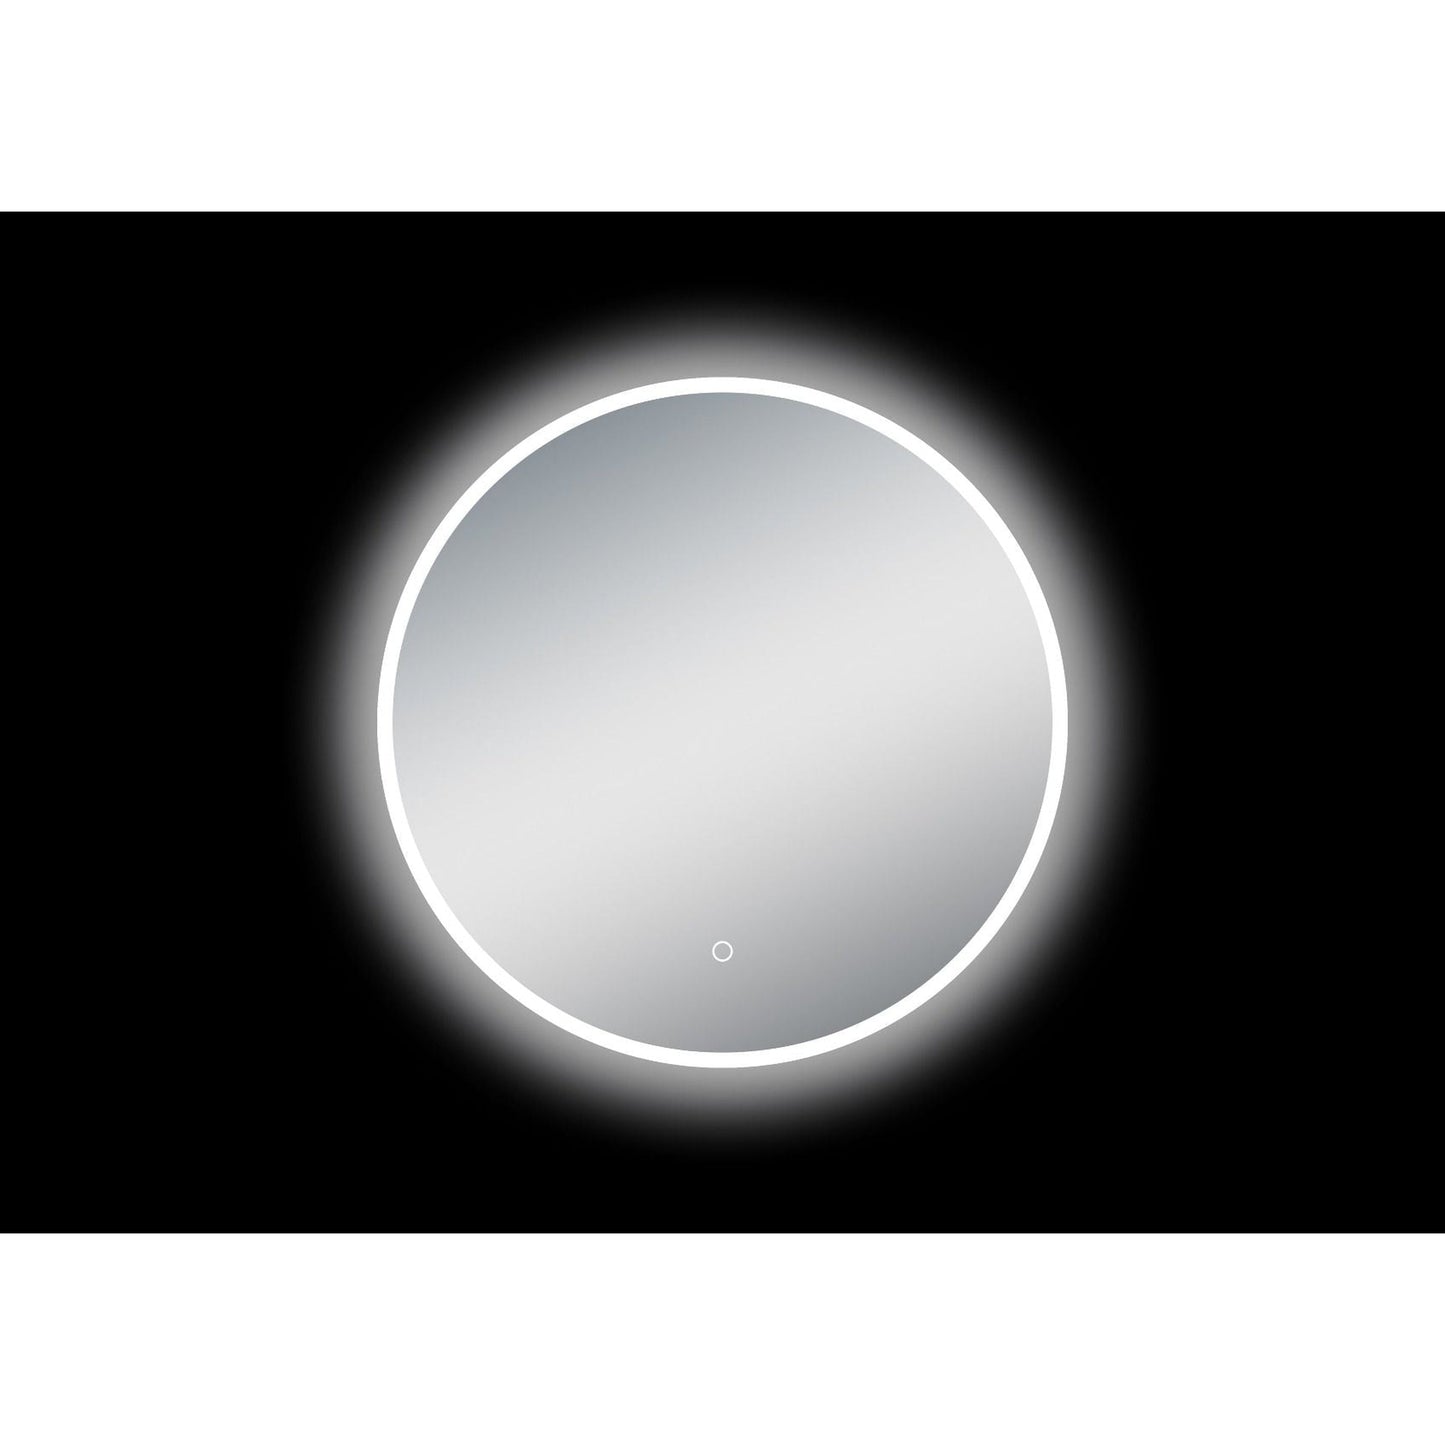 DreamWerks Trivento 32" Round LED Mirror